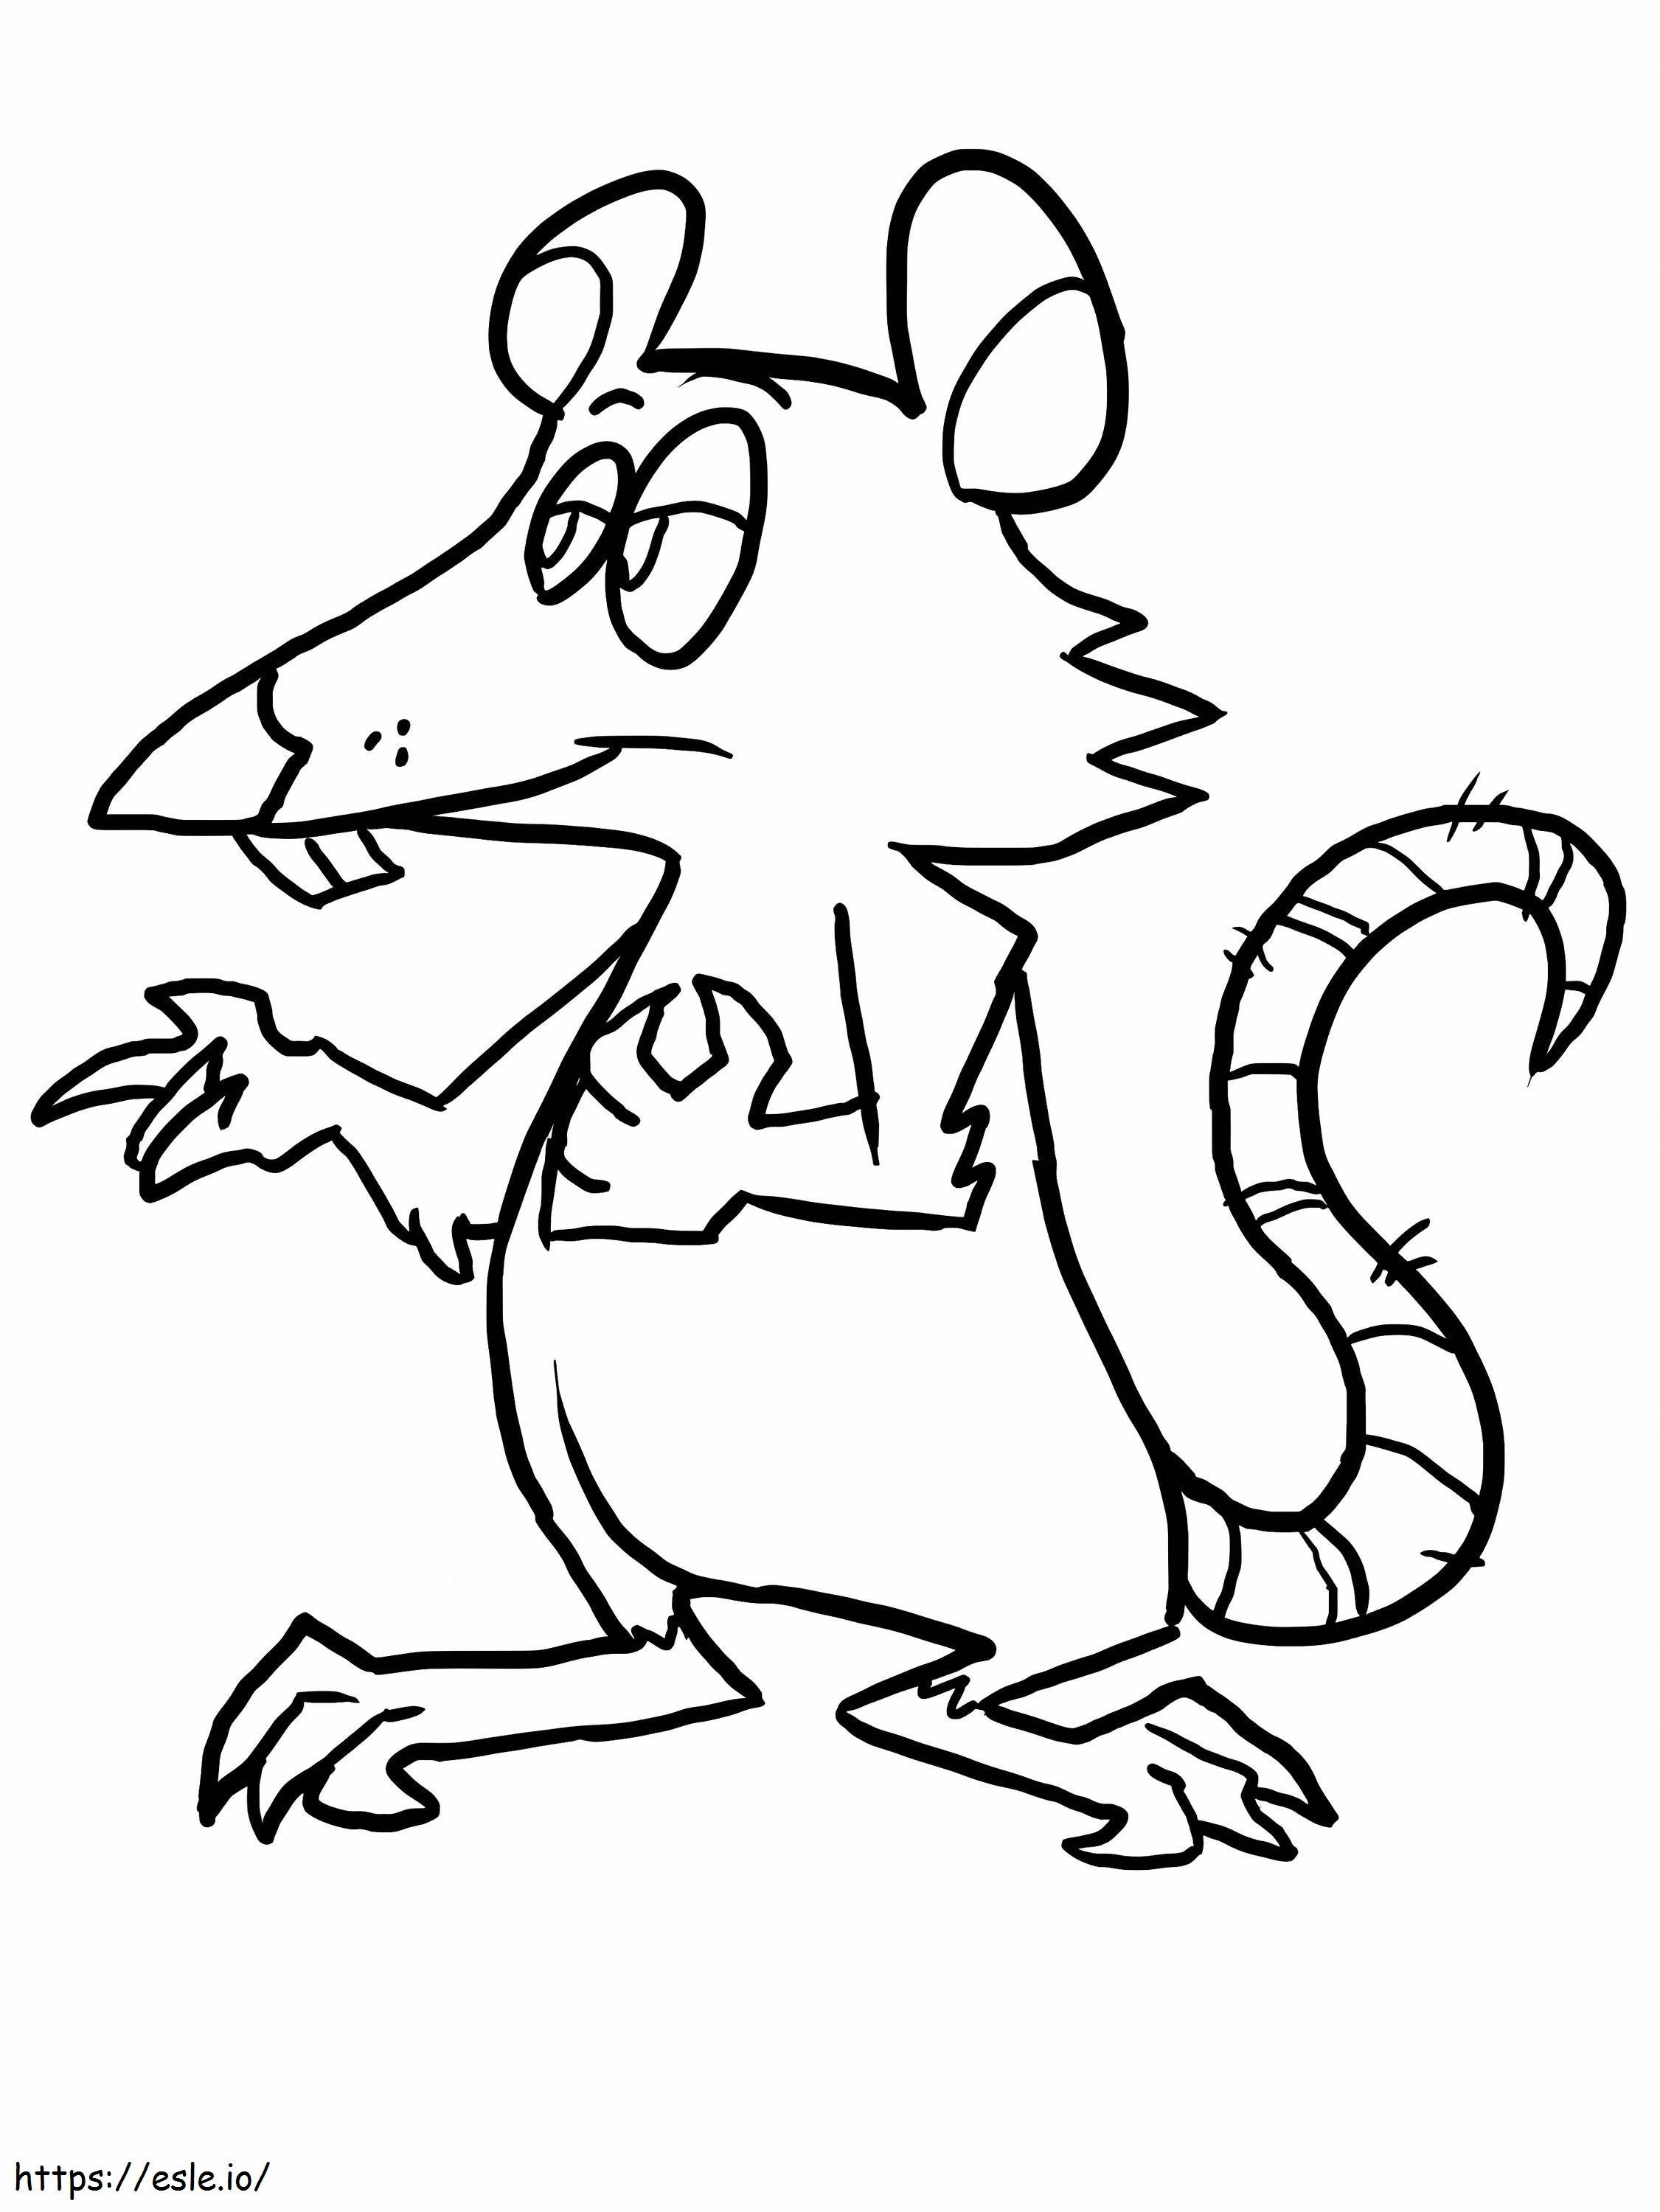 Rato de Desenho Animado para colorir